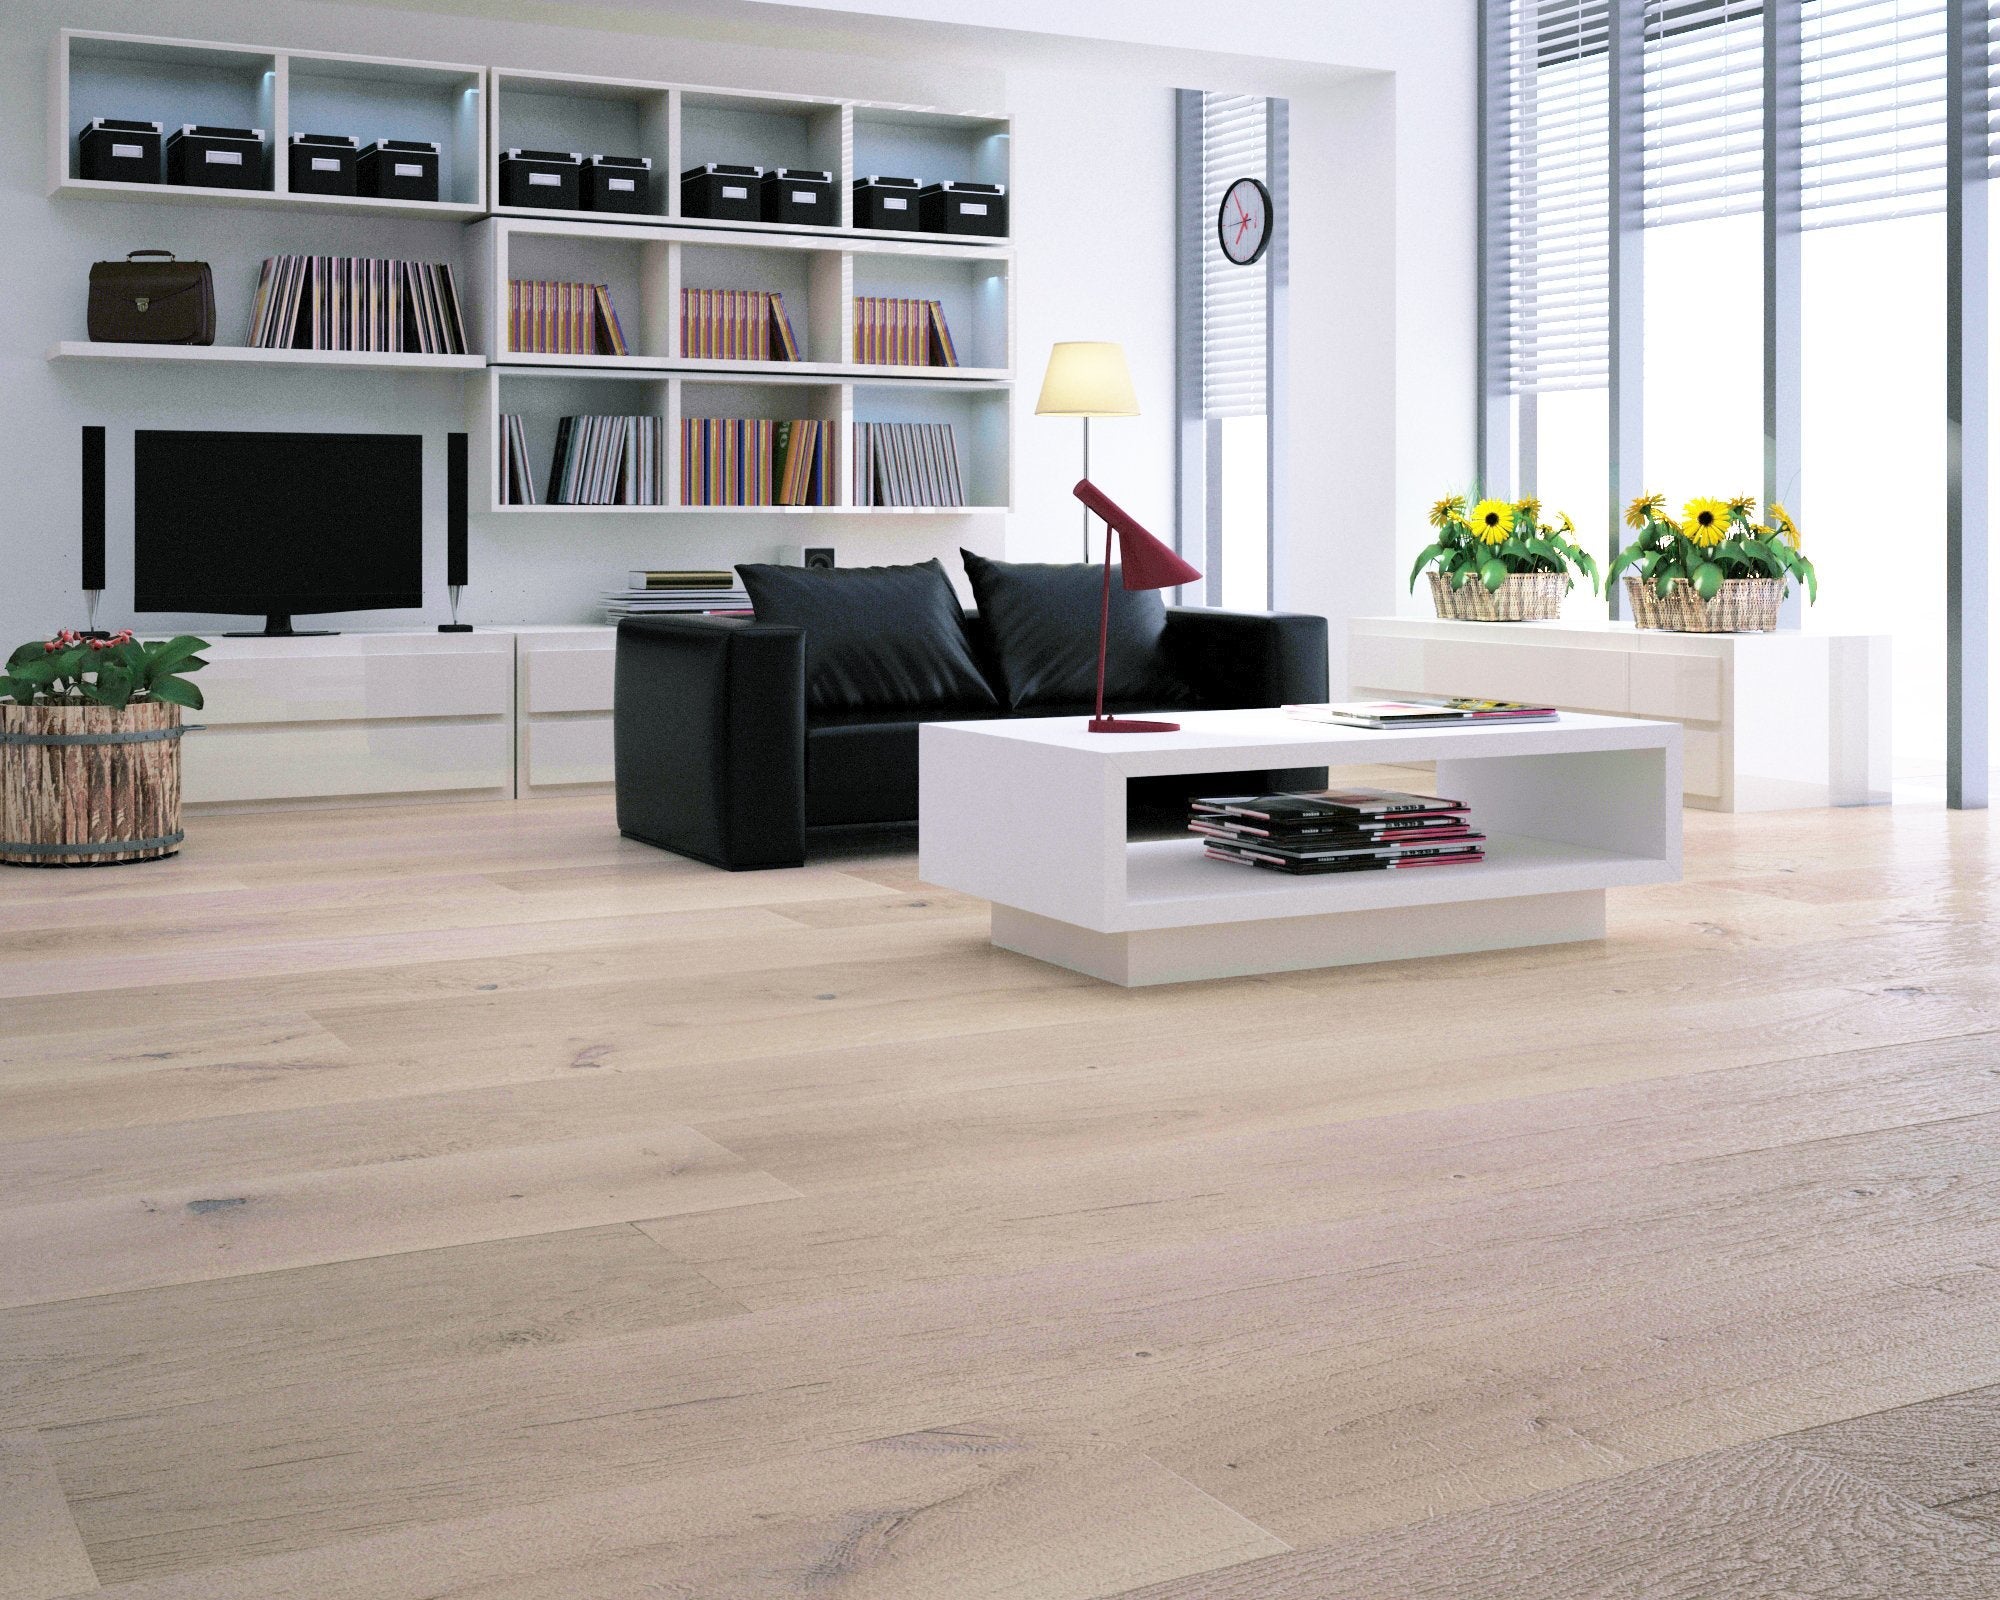 teka royal chambord german french white oak natural hardwood flooring plank natural matt lacquer distributed by surface group international